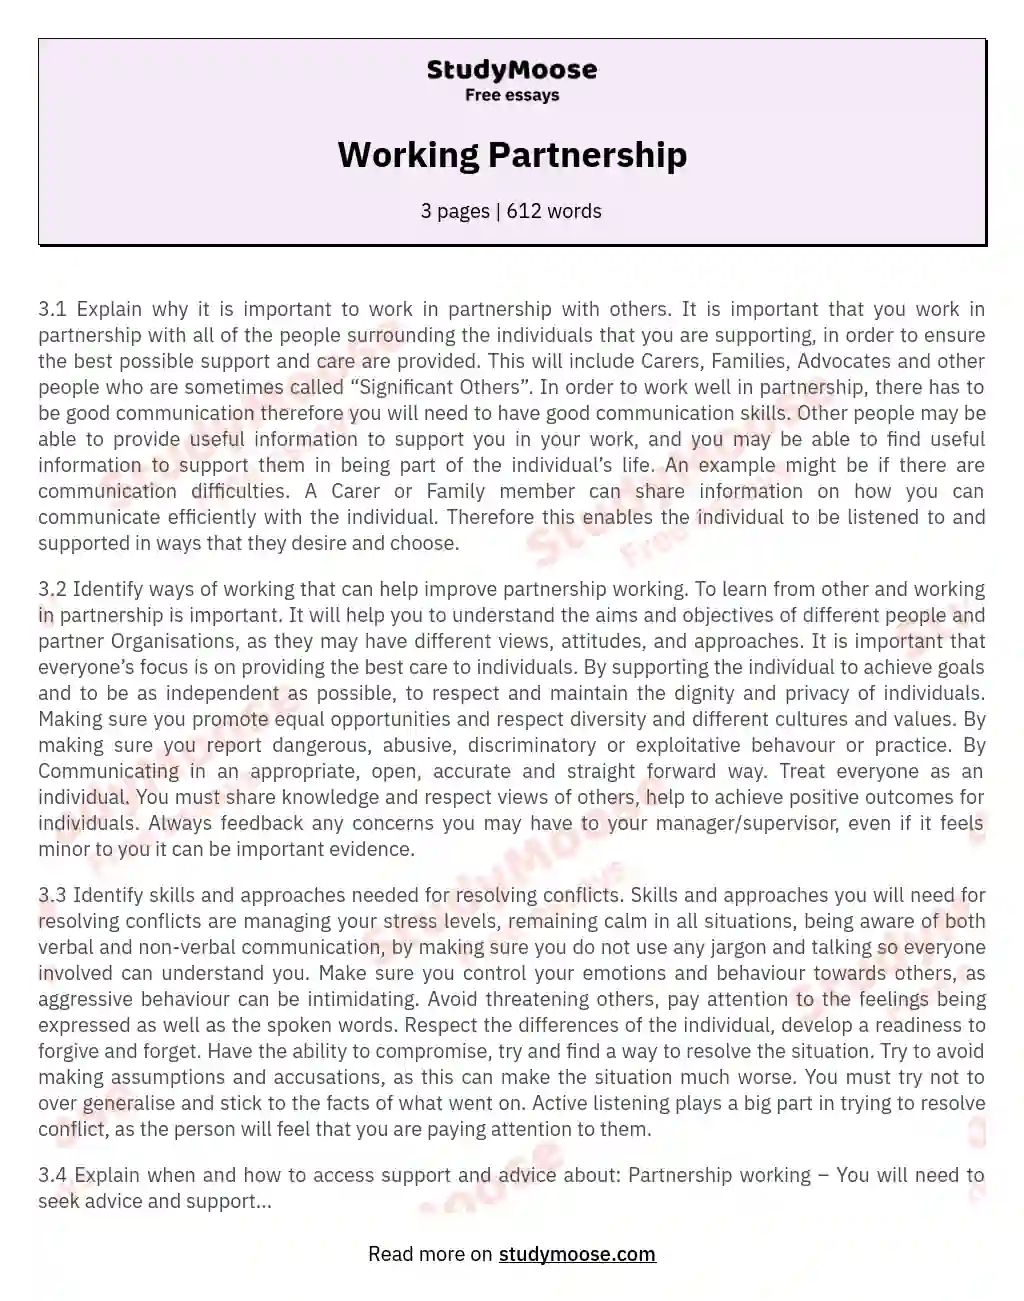 Working Partnership essay